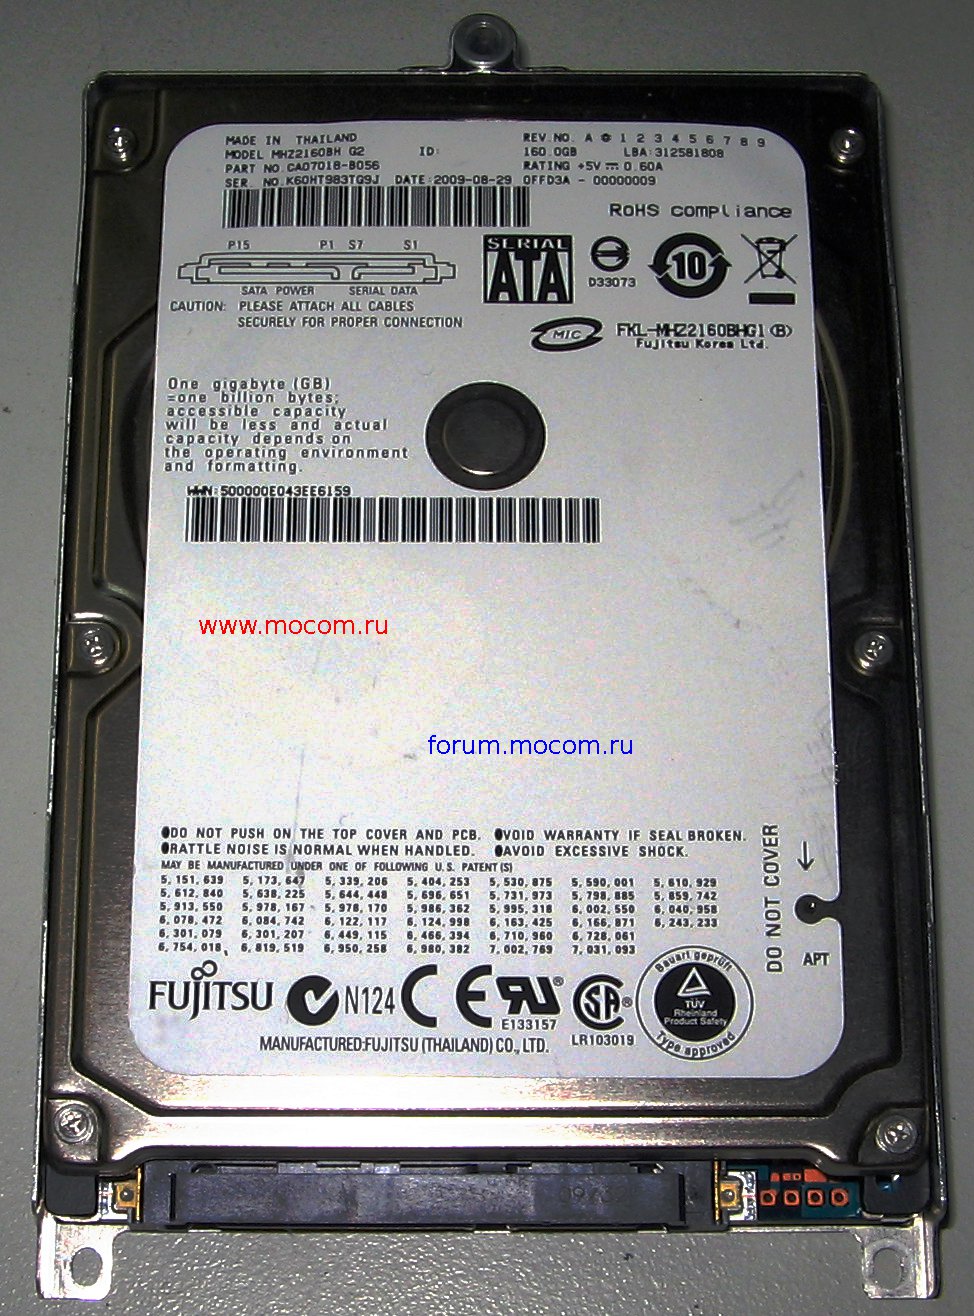 MHZ2160BH (2.5インチHDD 160GB S-ATA) FUJITSU - パソコン周辺機器